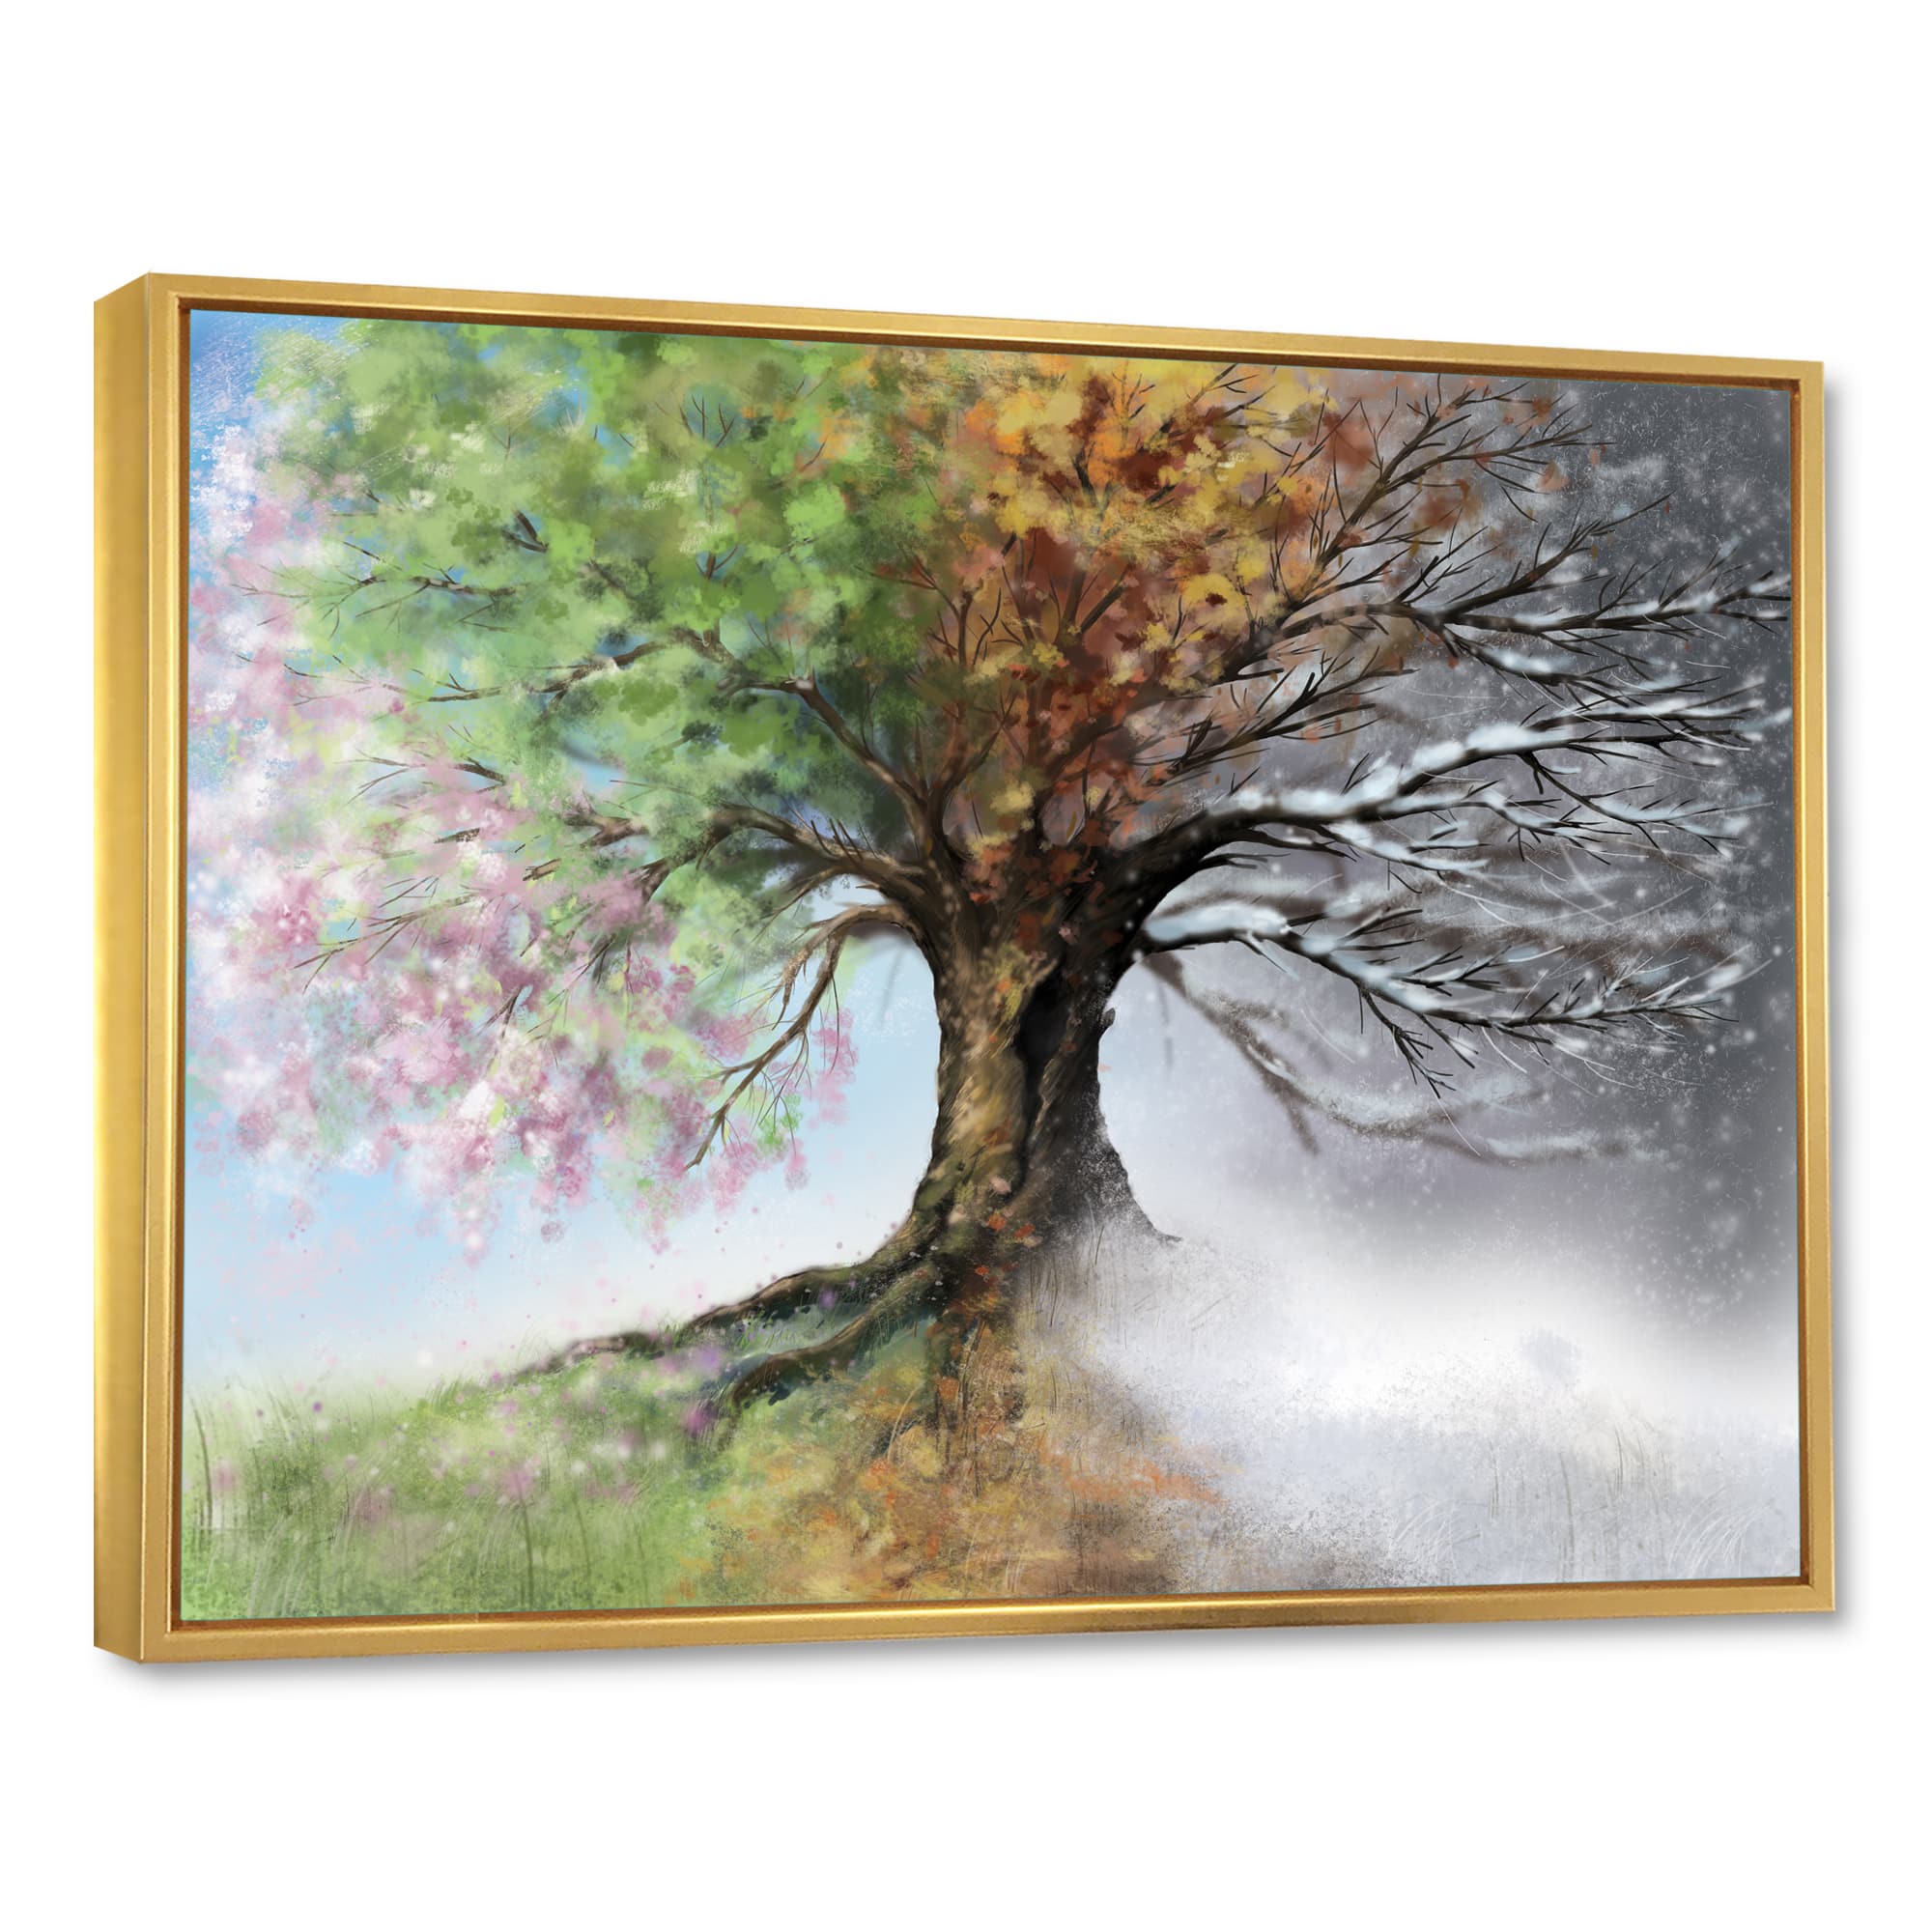 Designart - Tree with Four Seasons - Tree Painting Framed Canvas Art Print